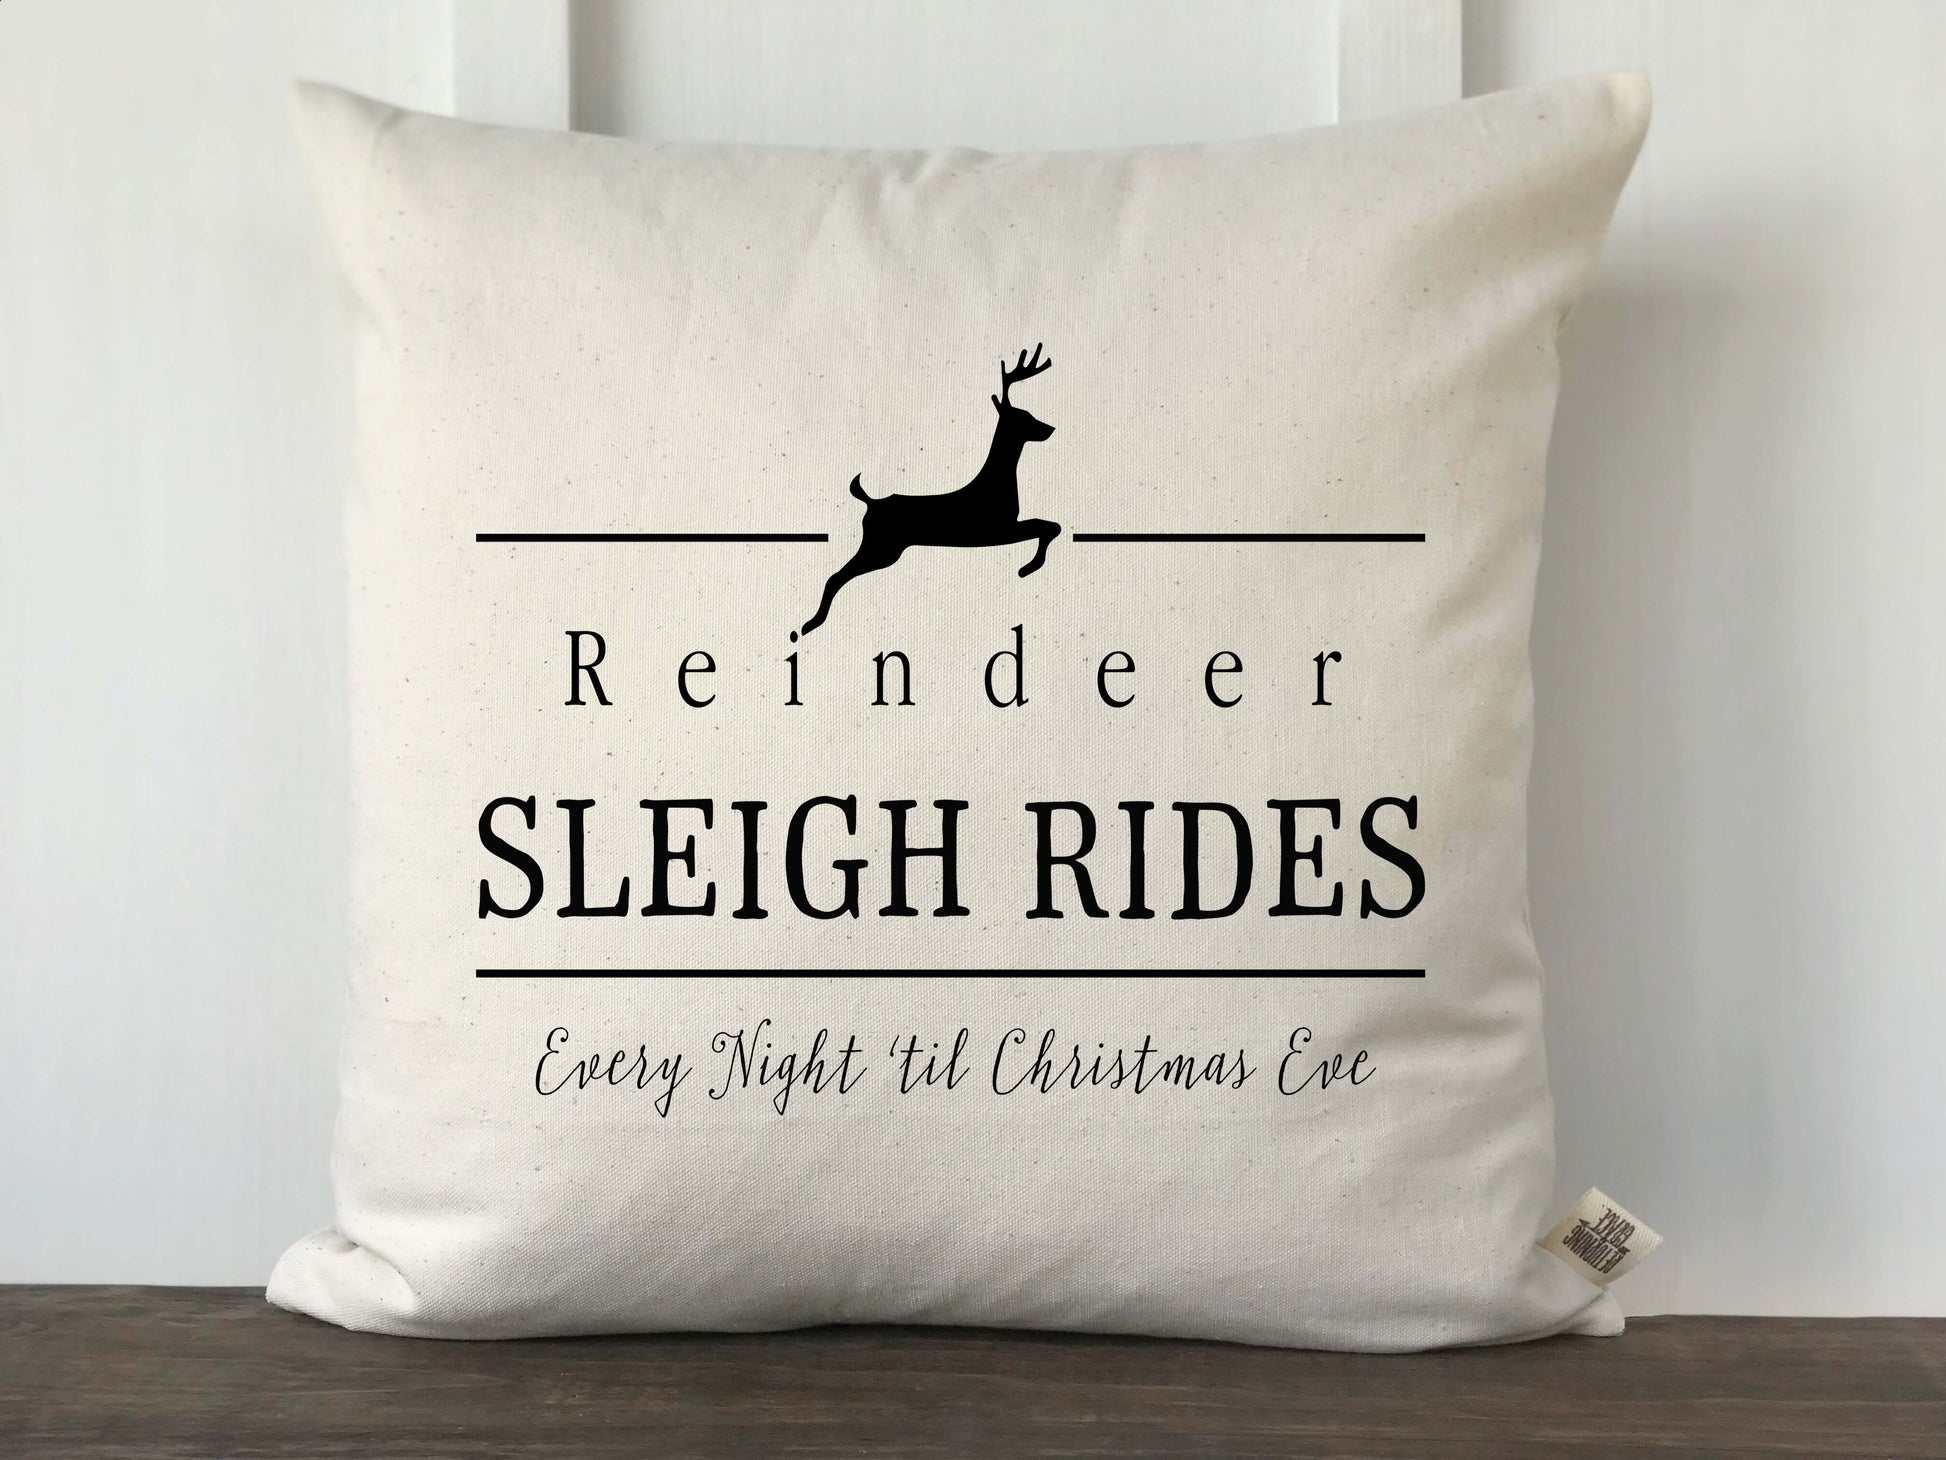 Reindeer Sleigh Rides Christmas Pillow Cover - Returning Grace Designs